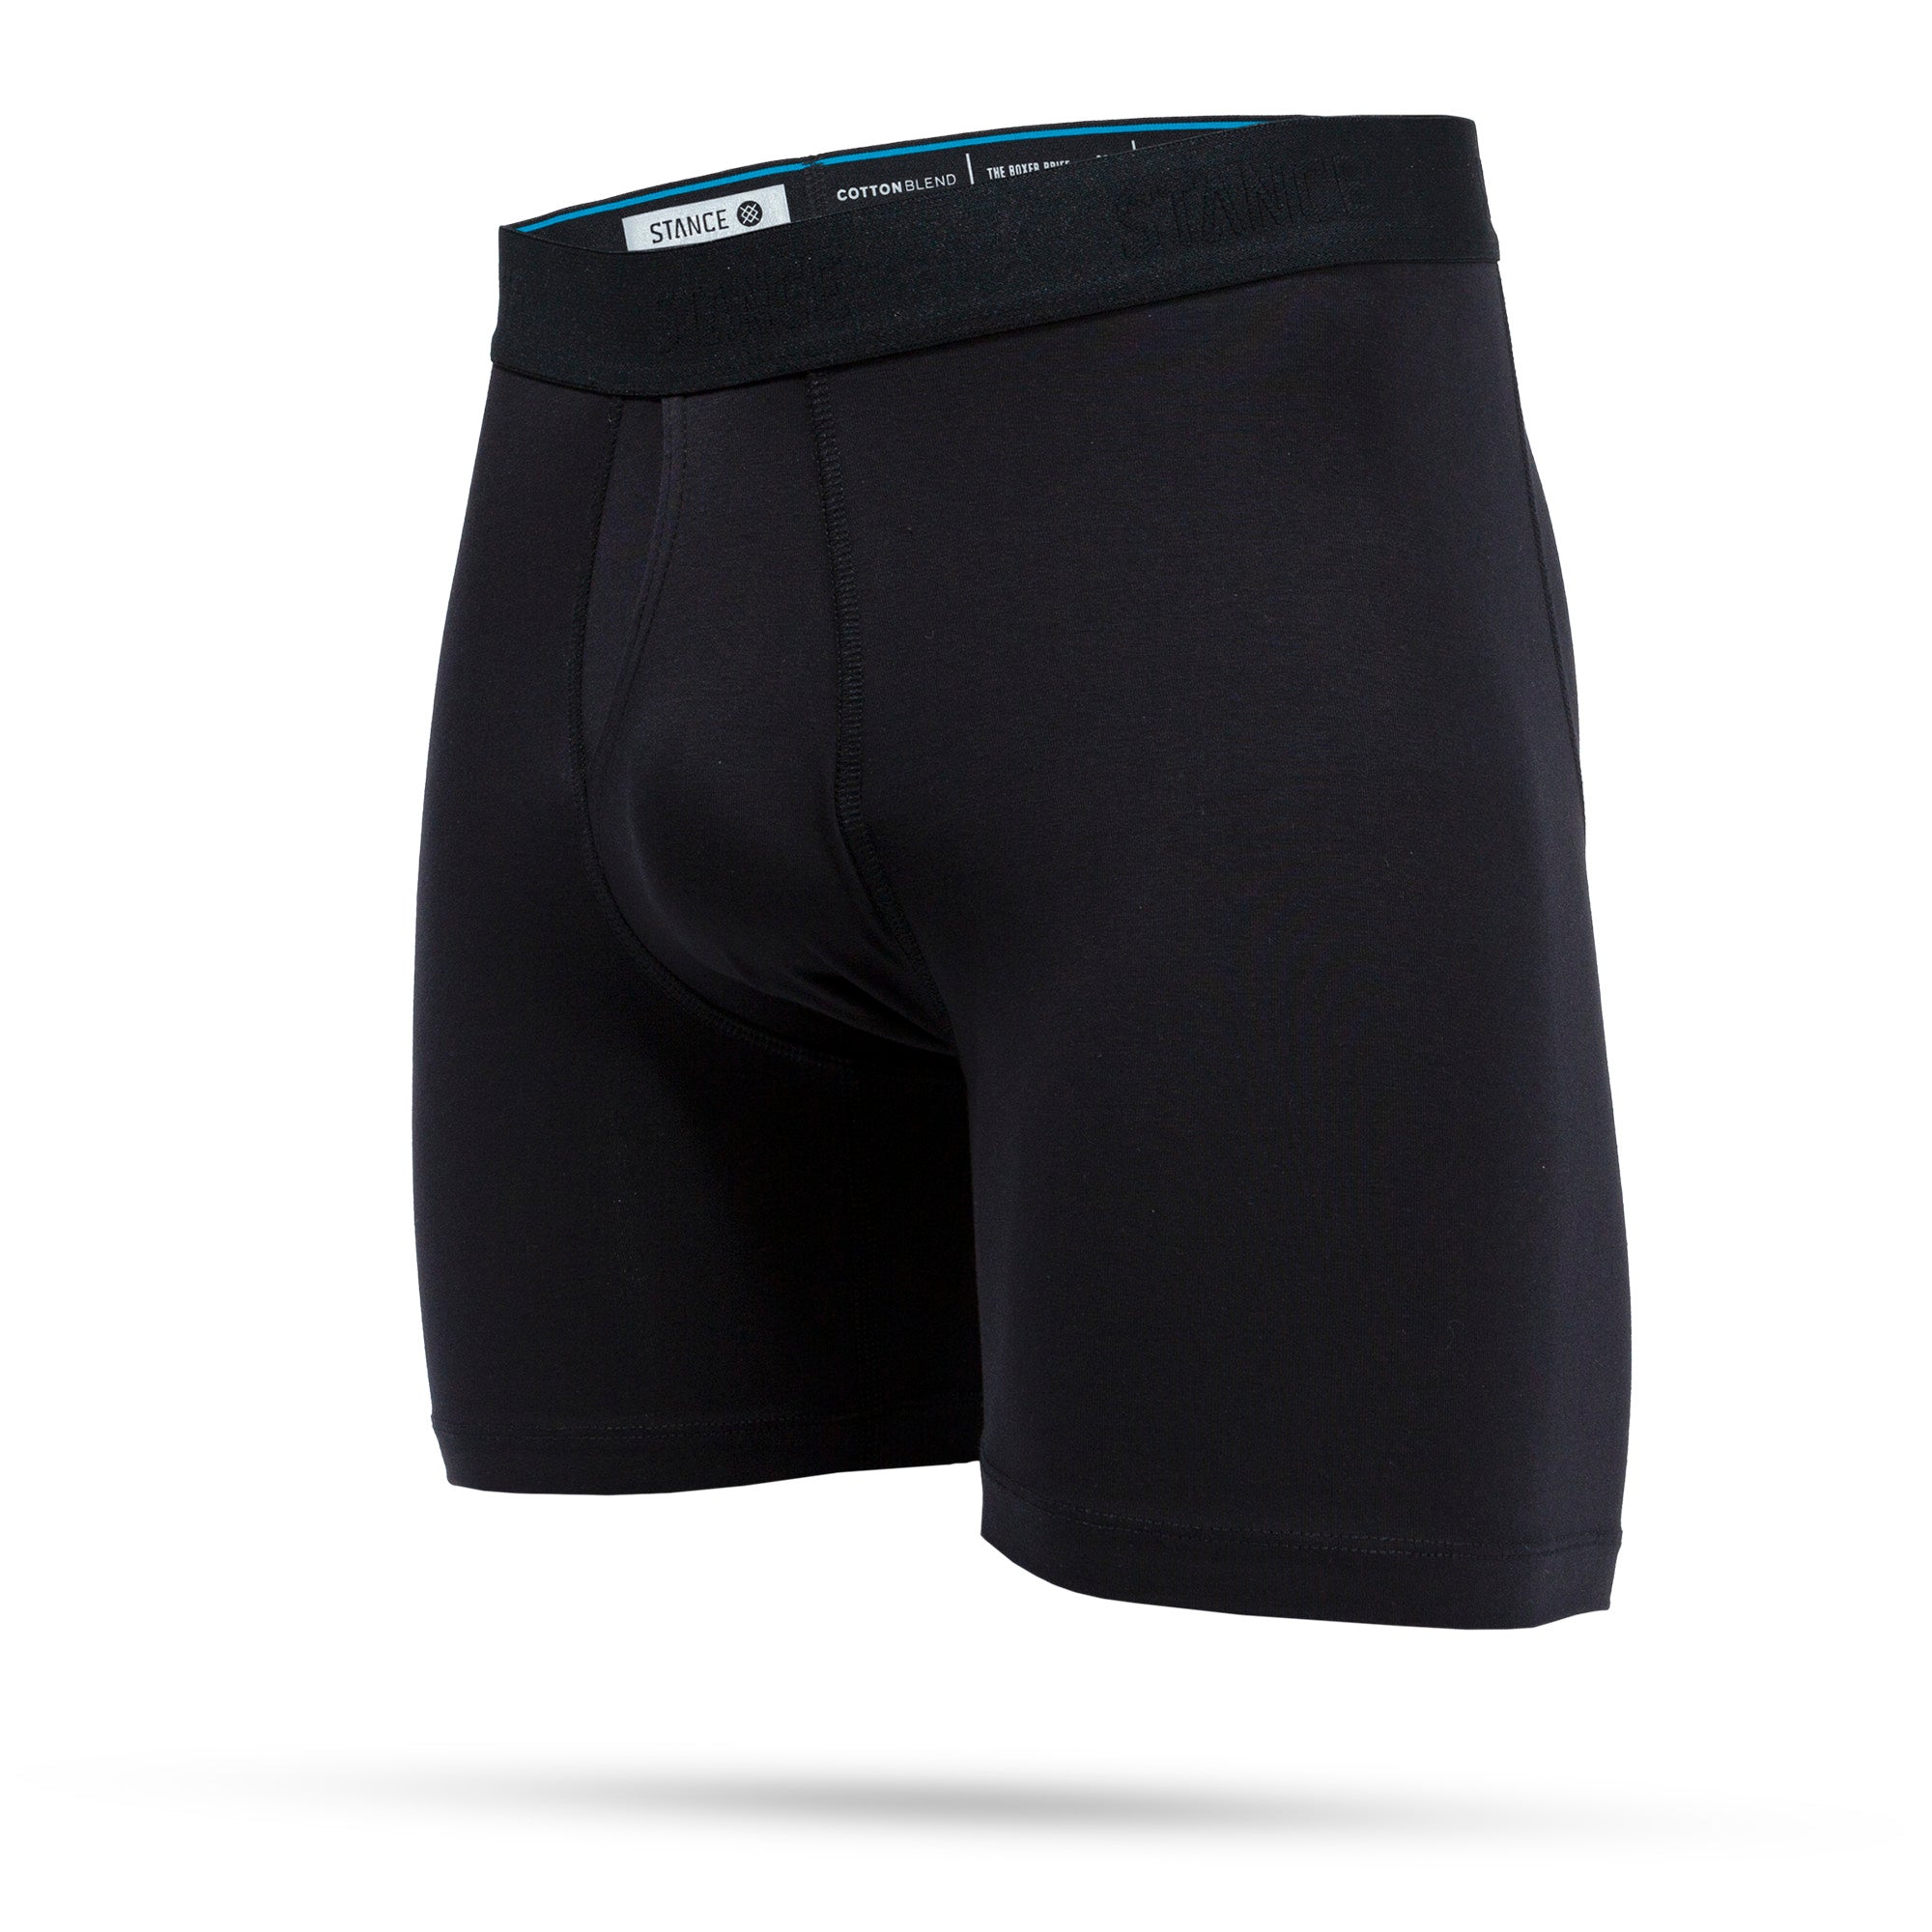 Stance Wavy Palm Boxer Briefs Peach Patterned Poly Blend Underwear Shorts XL  : : Fashion